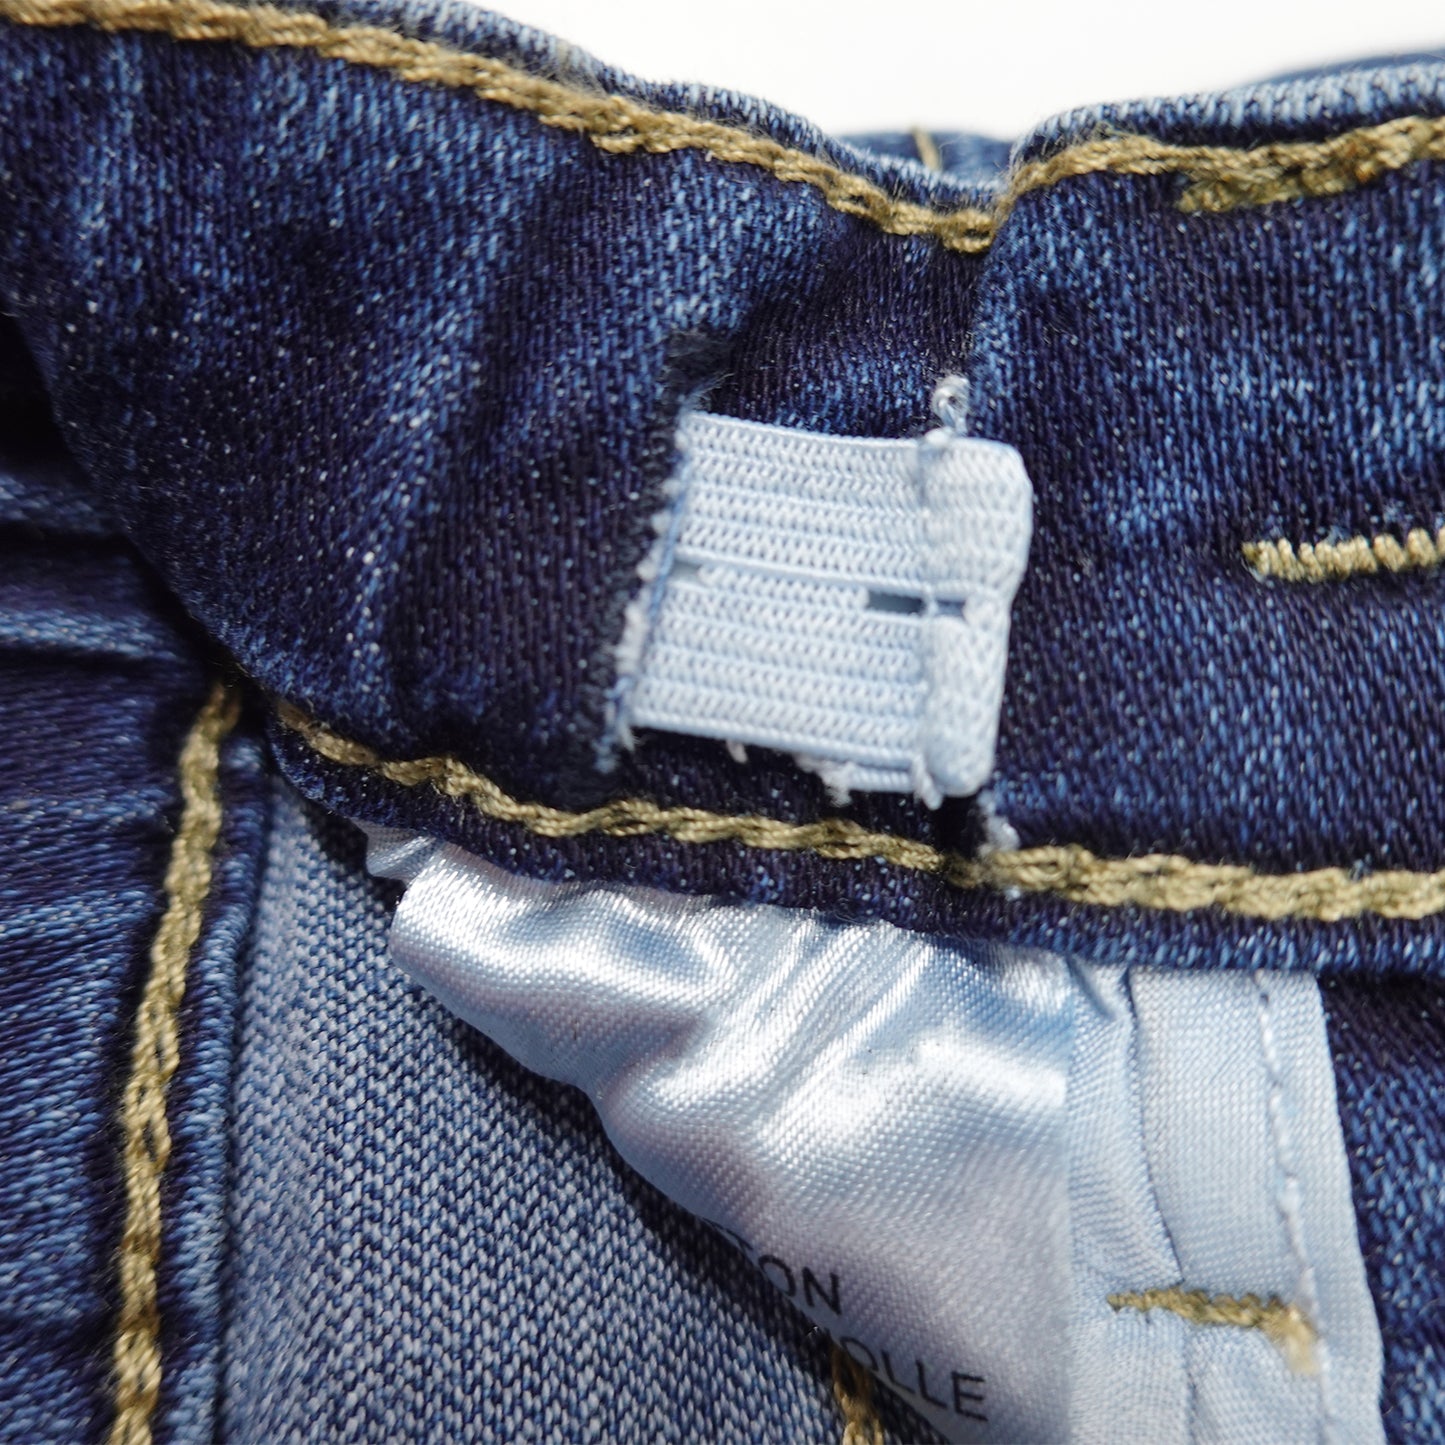 Baby Little Boys Girls Ripped Denim Soft Slim Pants Jeans